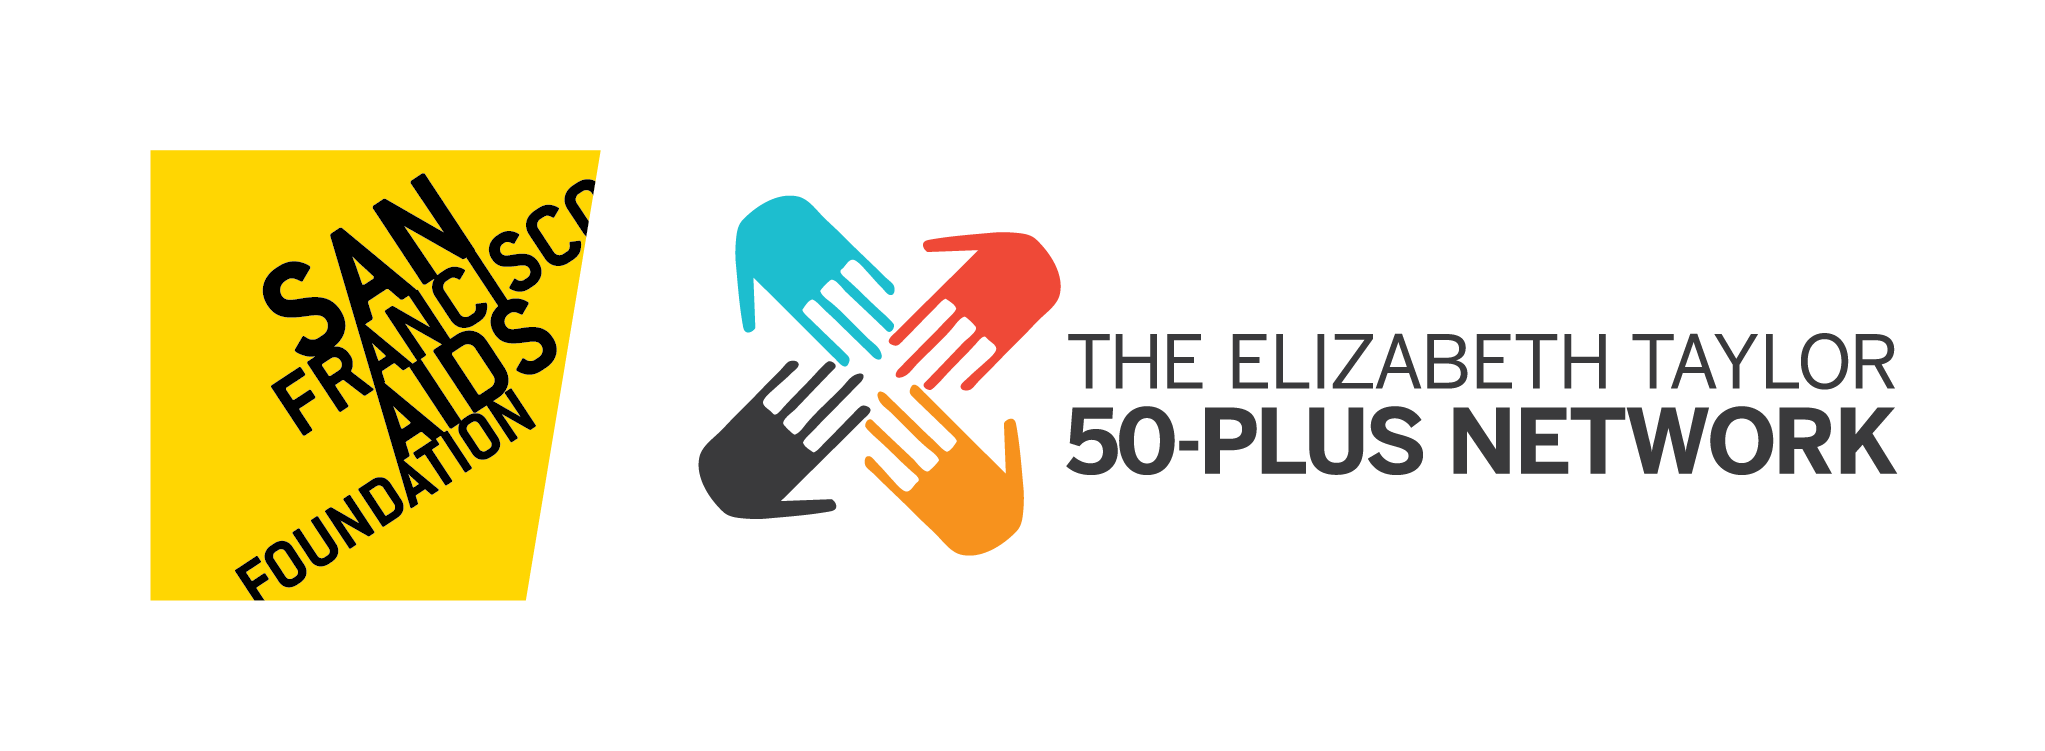 Elizabeth Taylor 50-Plus Network